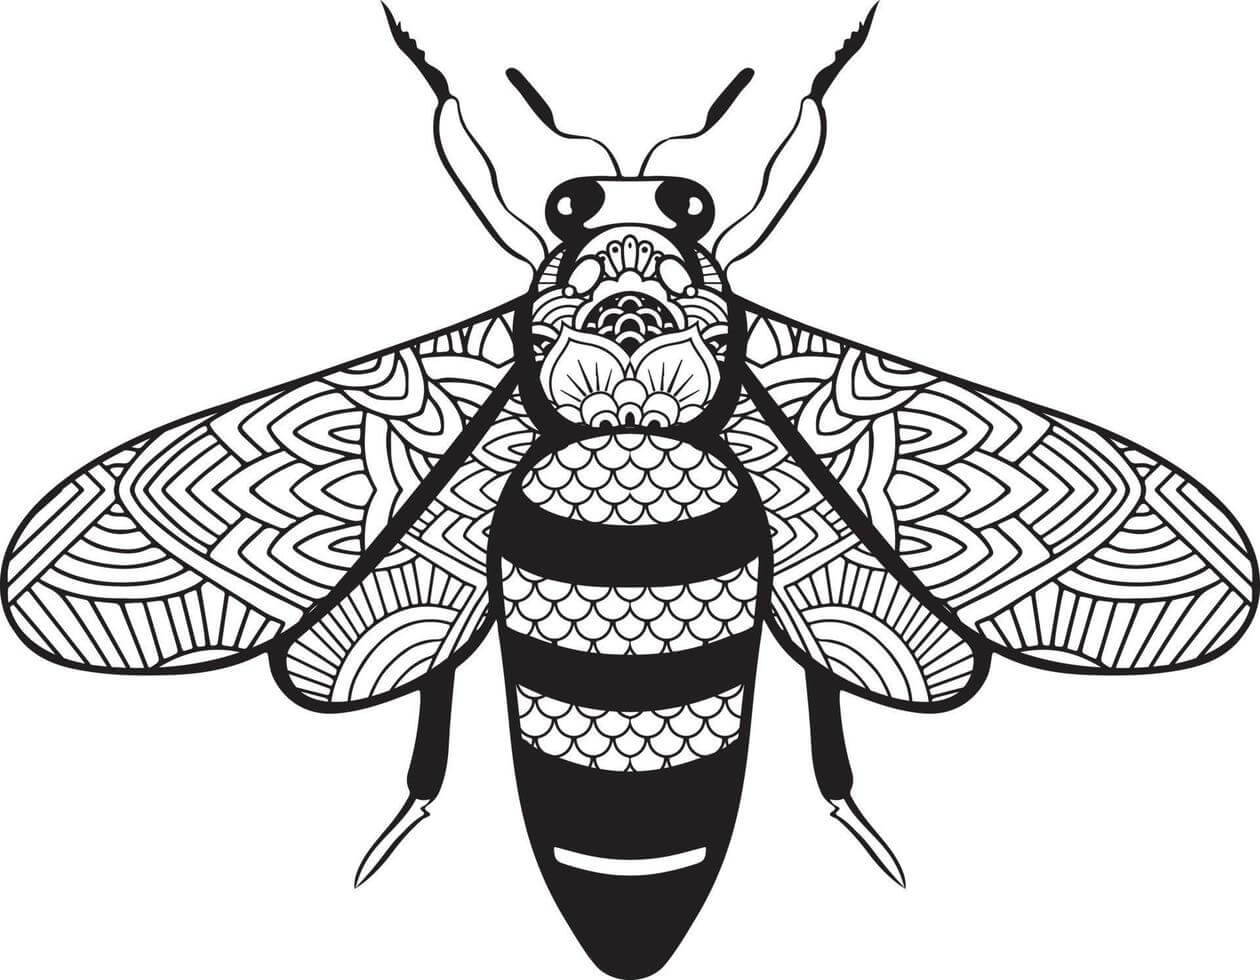 Mandala Bee Coloring Page - Sheet 6 Mandalas